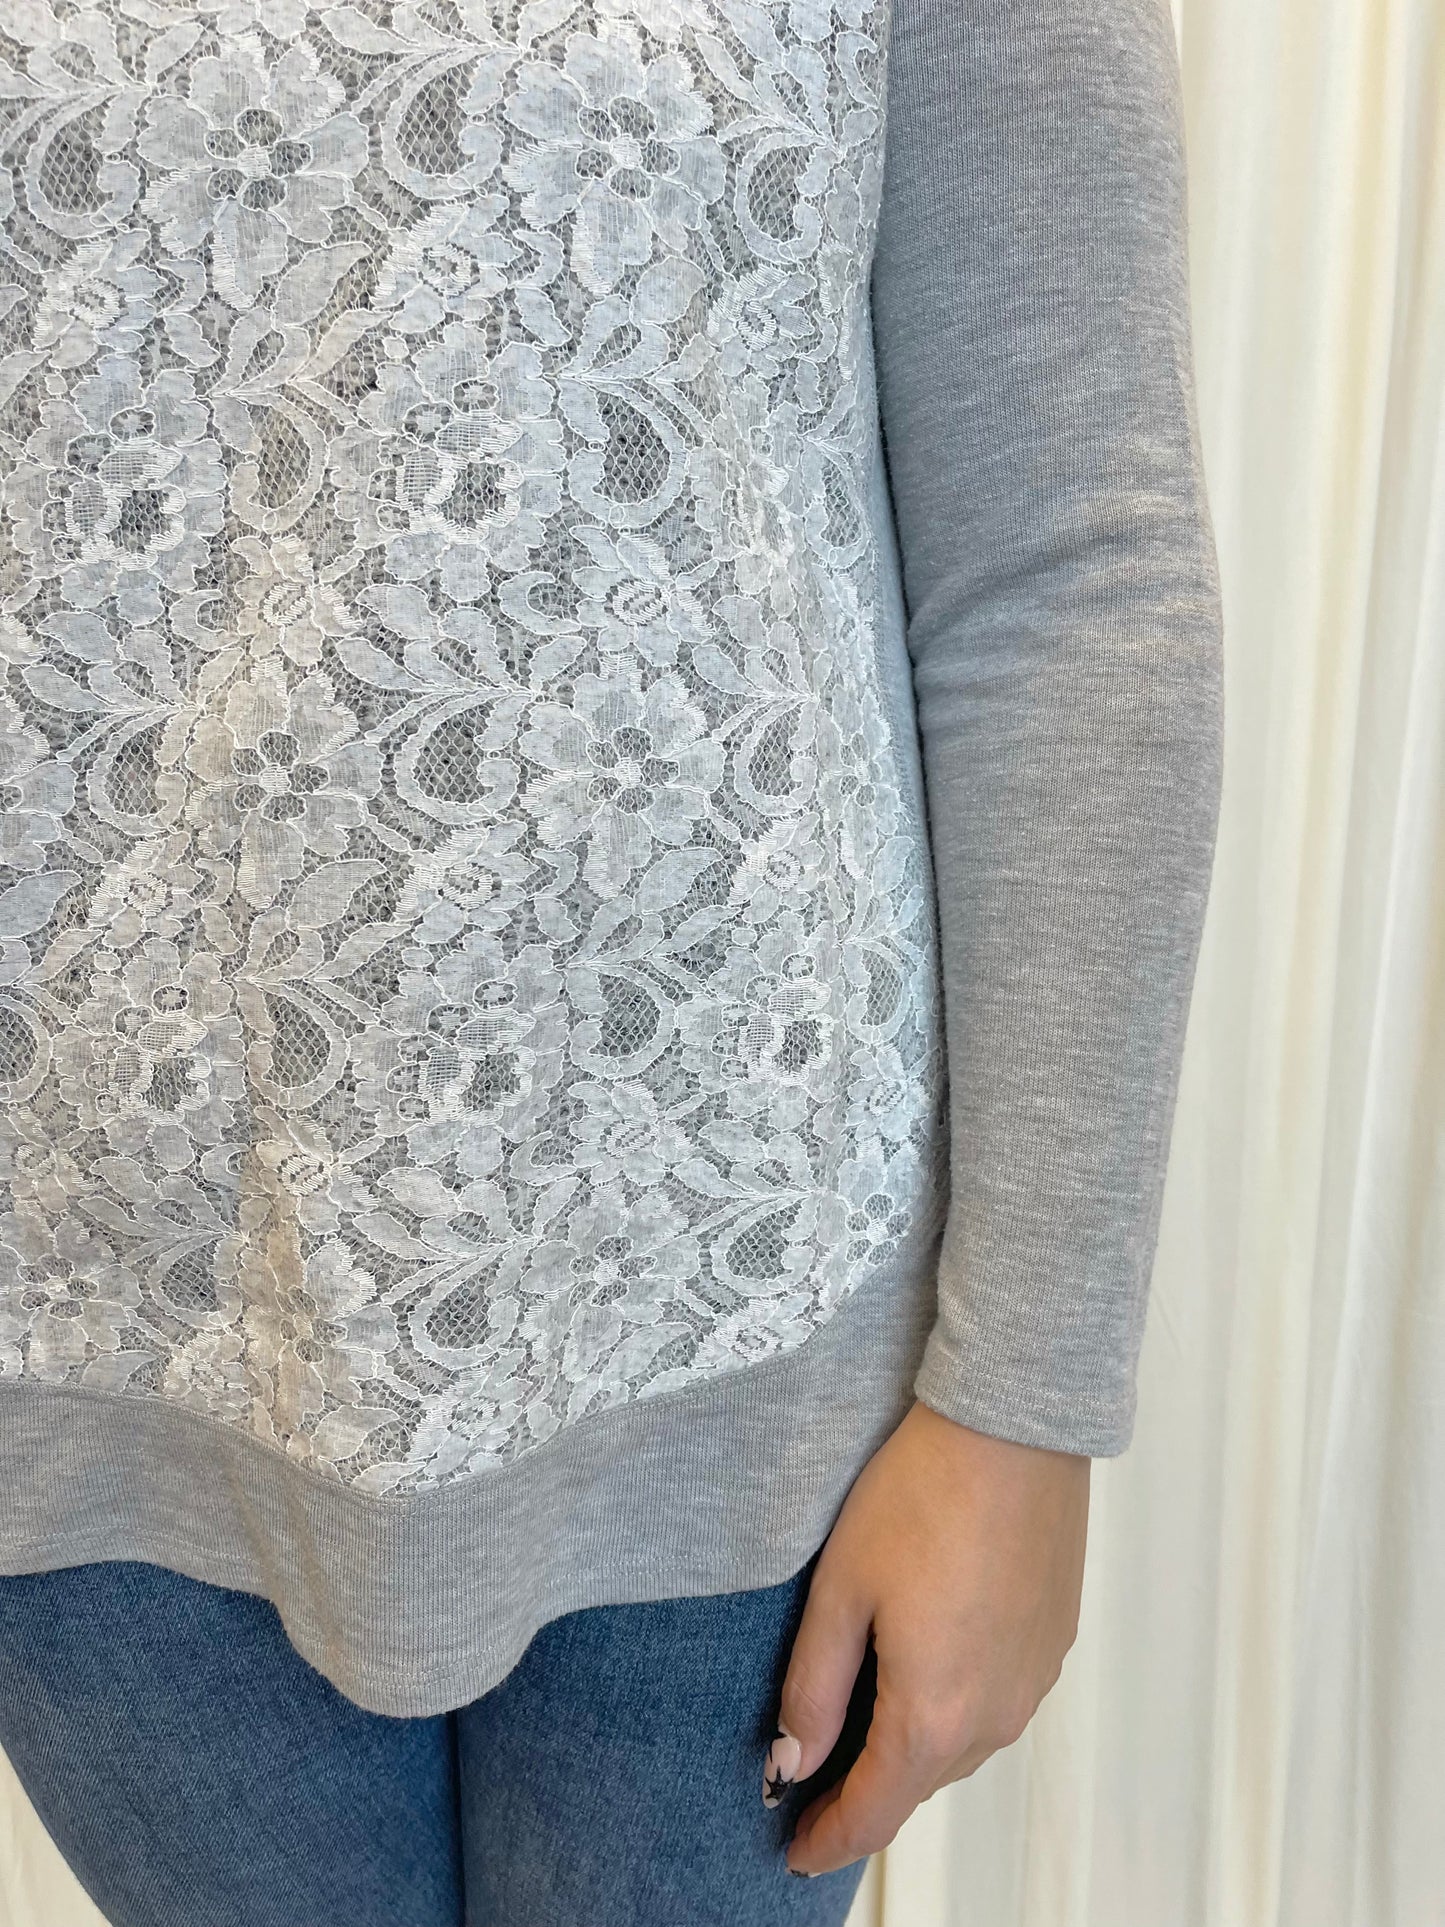 Gray Lace Cowl Sweatshirt - Large